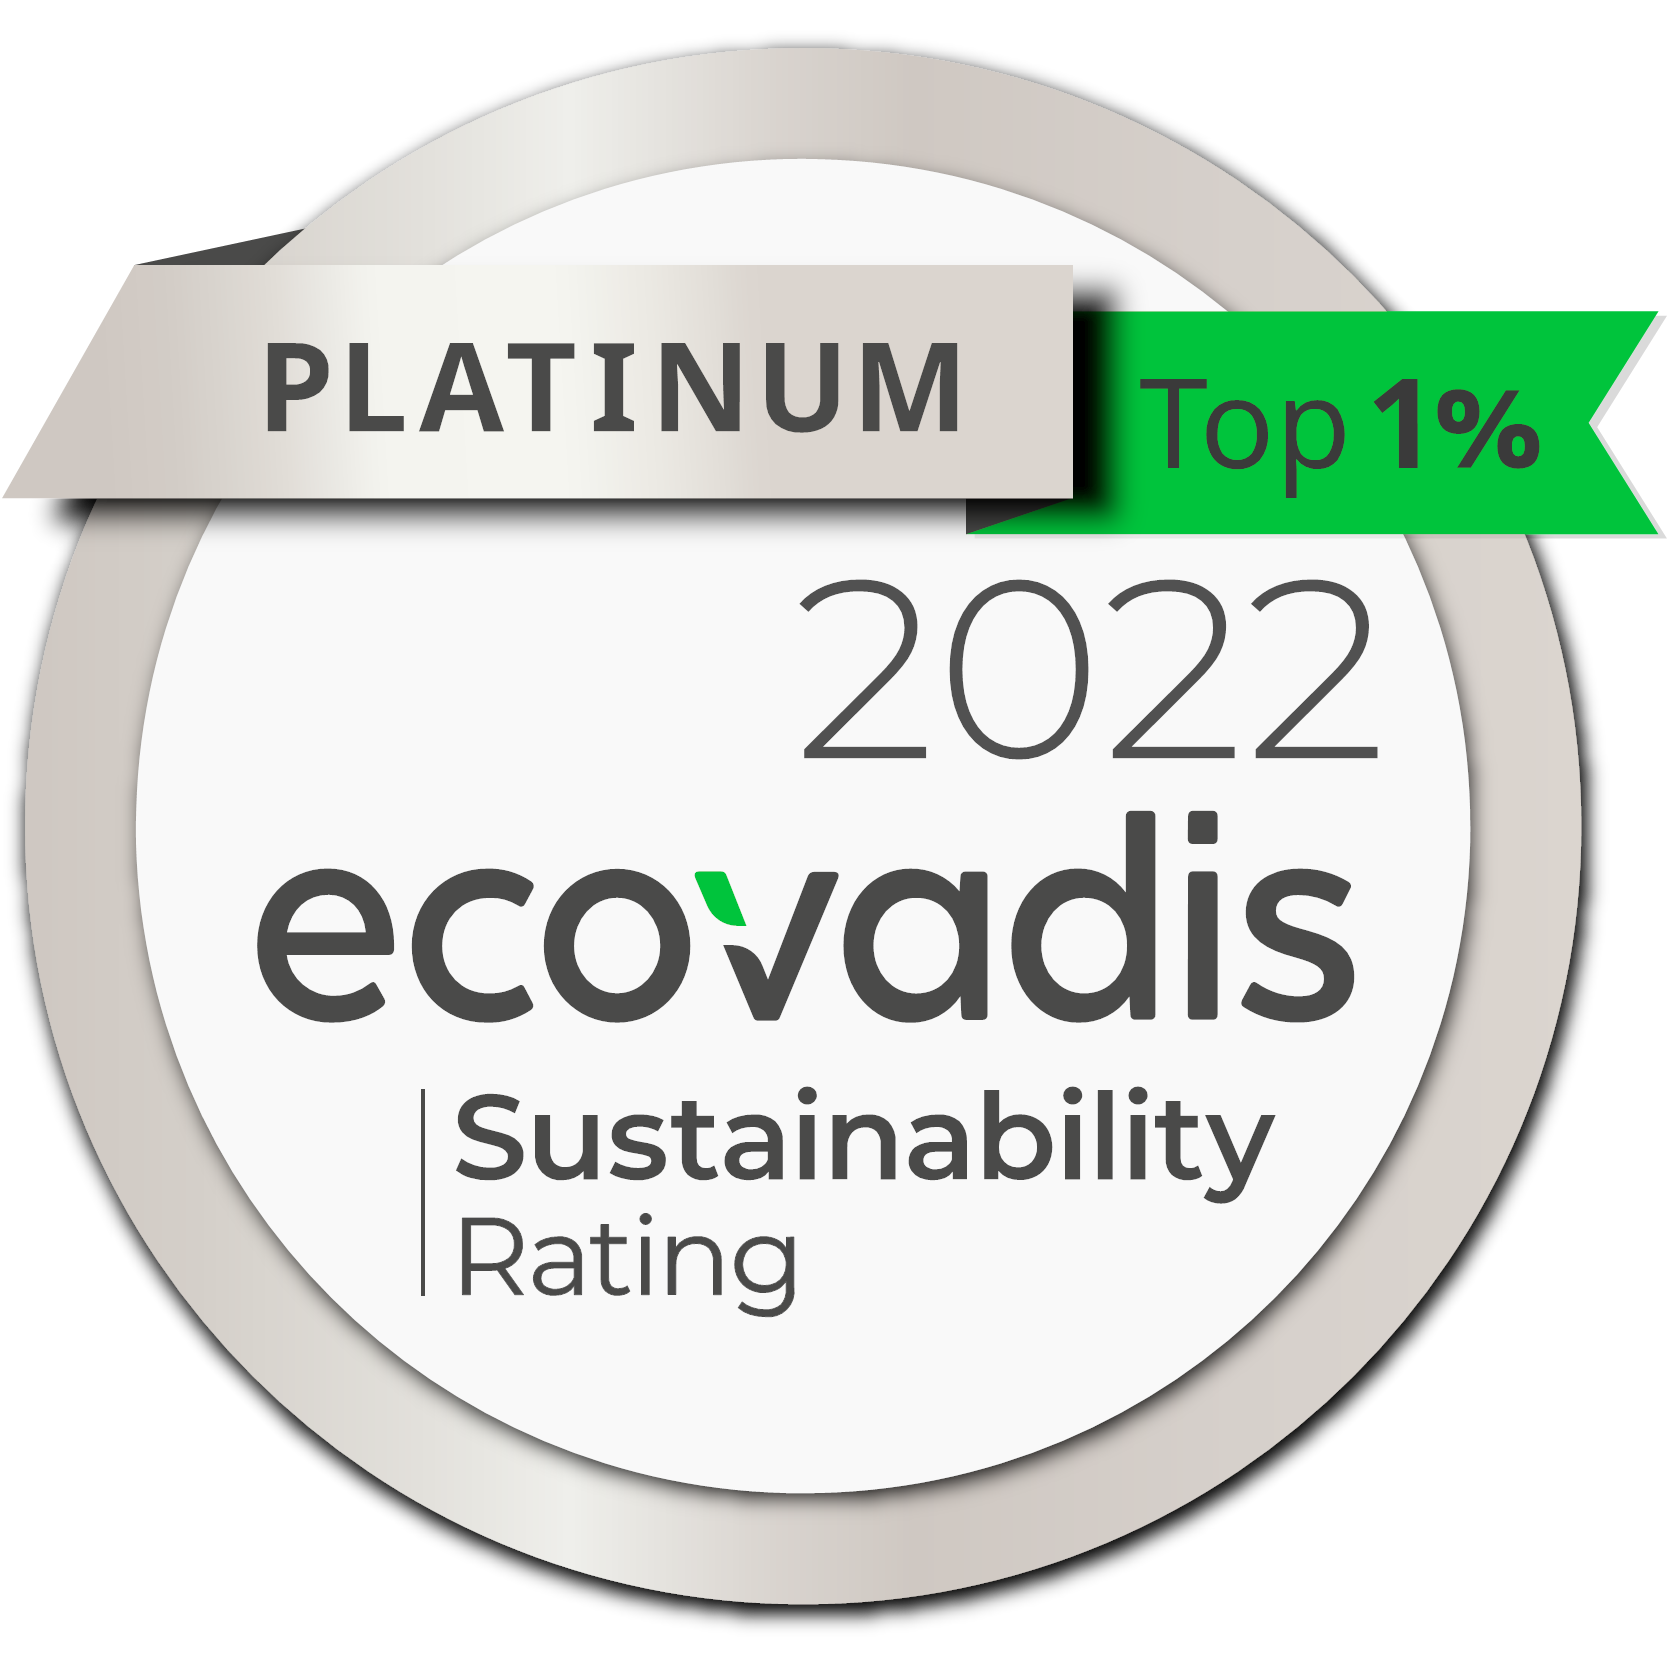 Ecovadis CSR rating